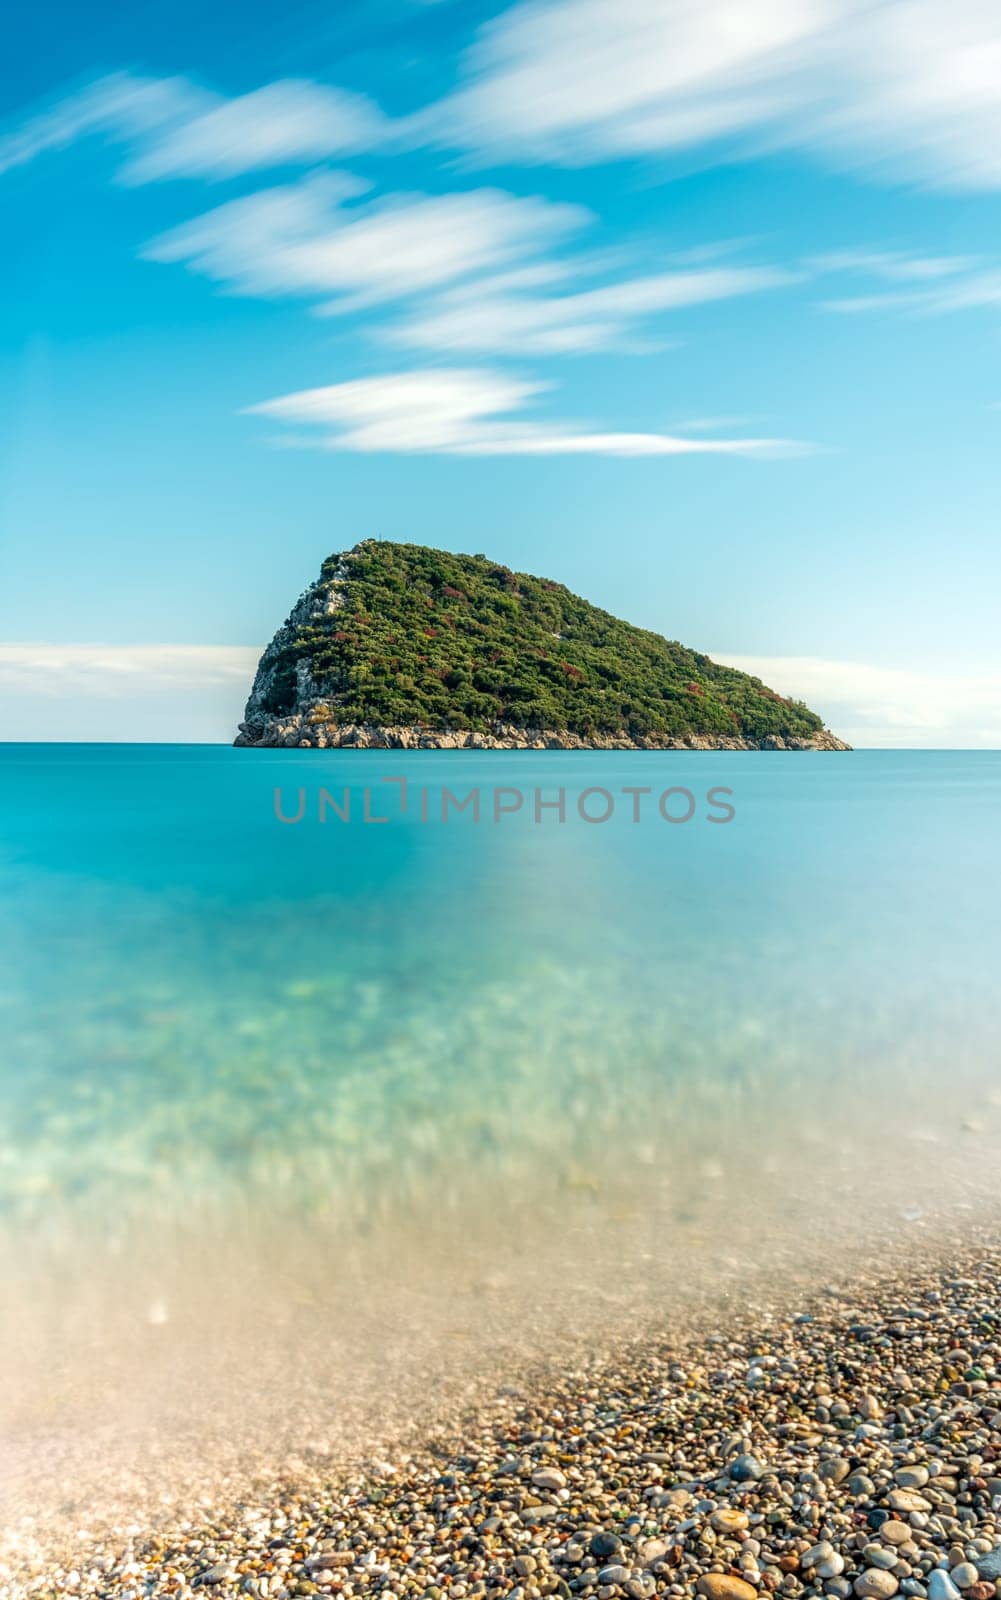 Long exposure photo of Antalya Sican Island with the beach